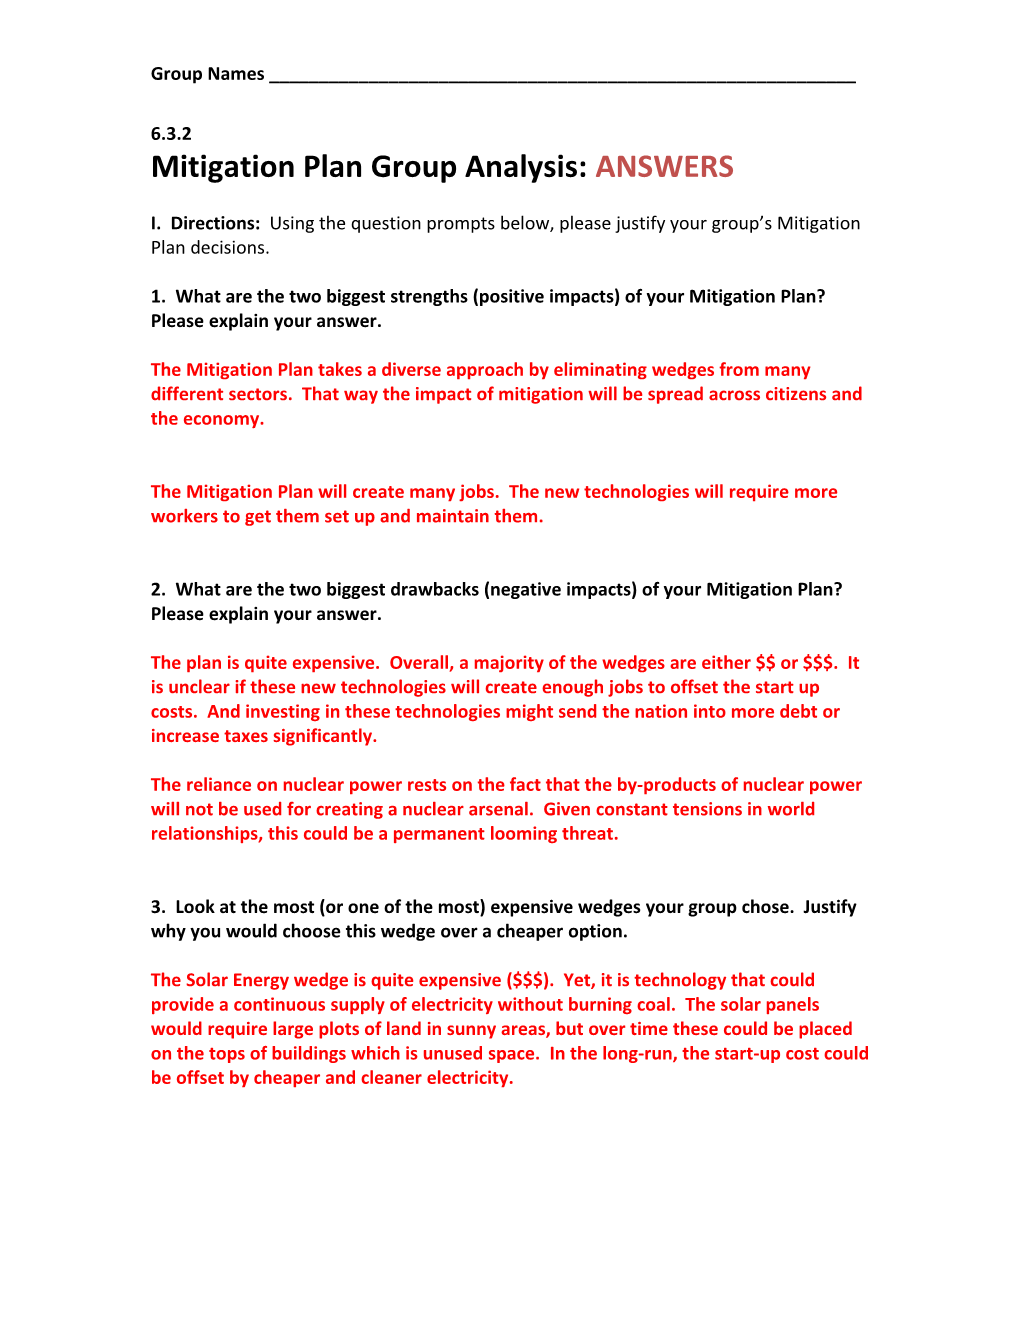 Mitigation Plan Group Analysis: ANSWERS